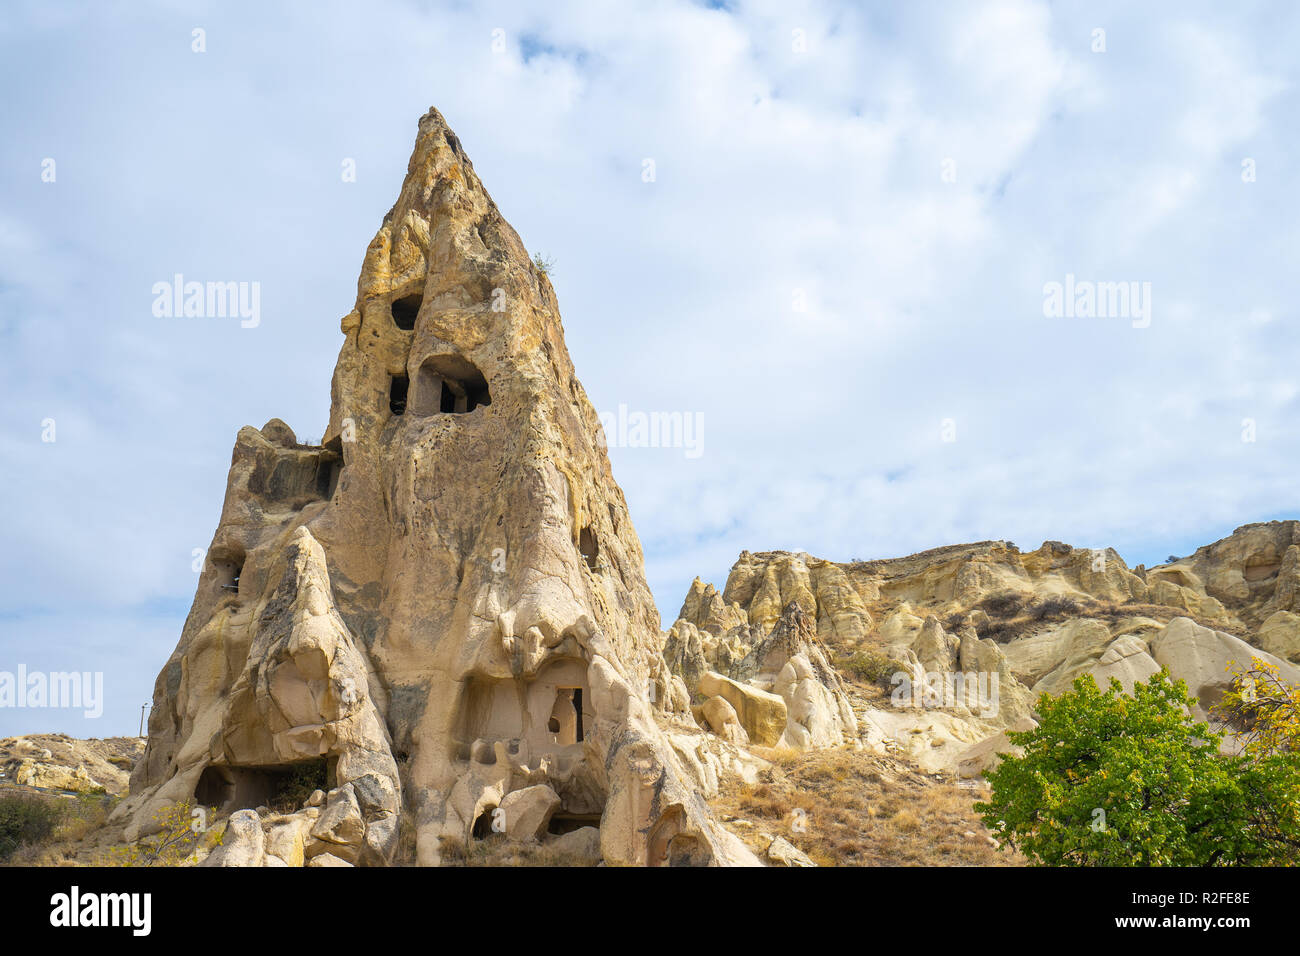 Open air museum in Cappadocia, Turkey. Stock Photo